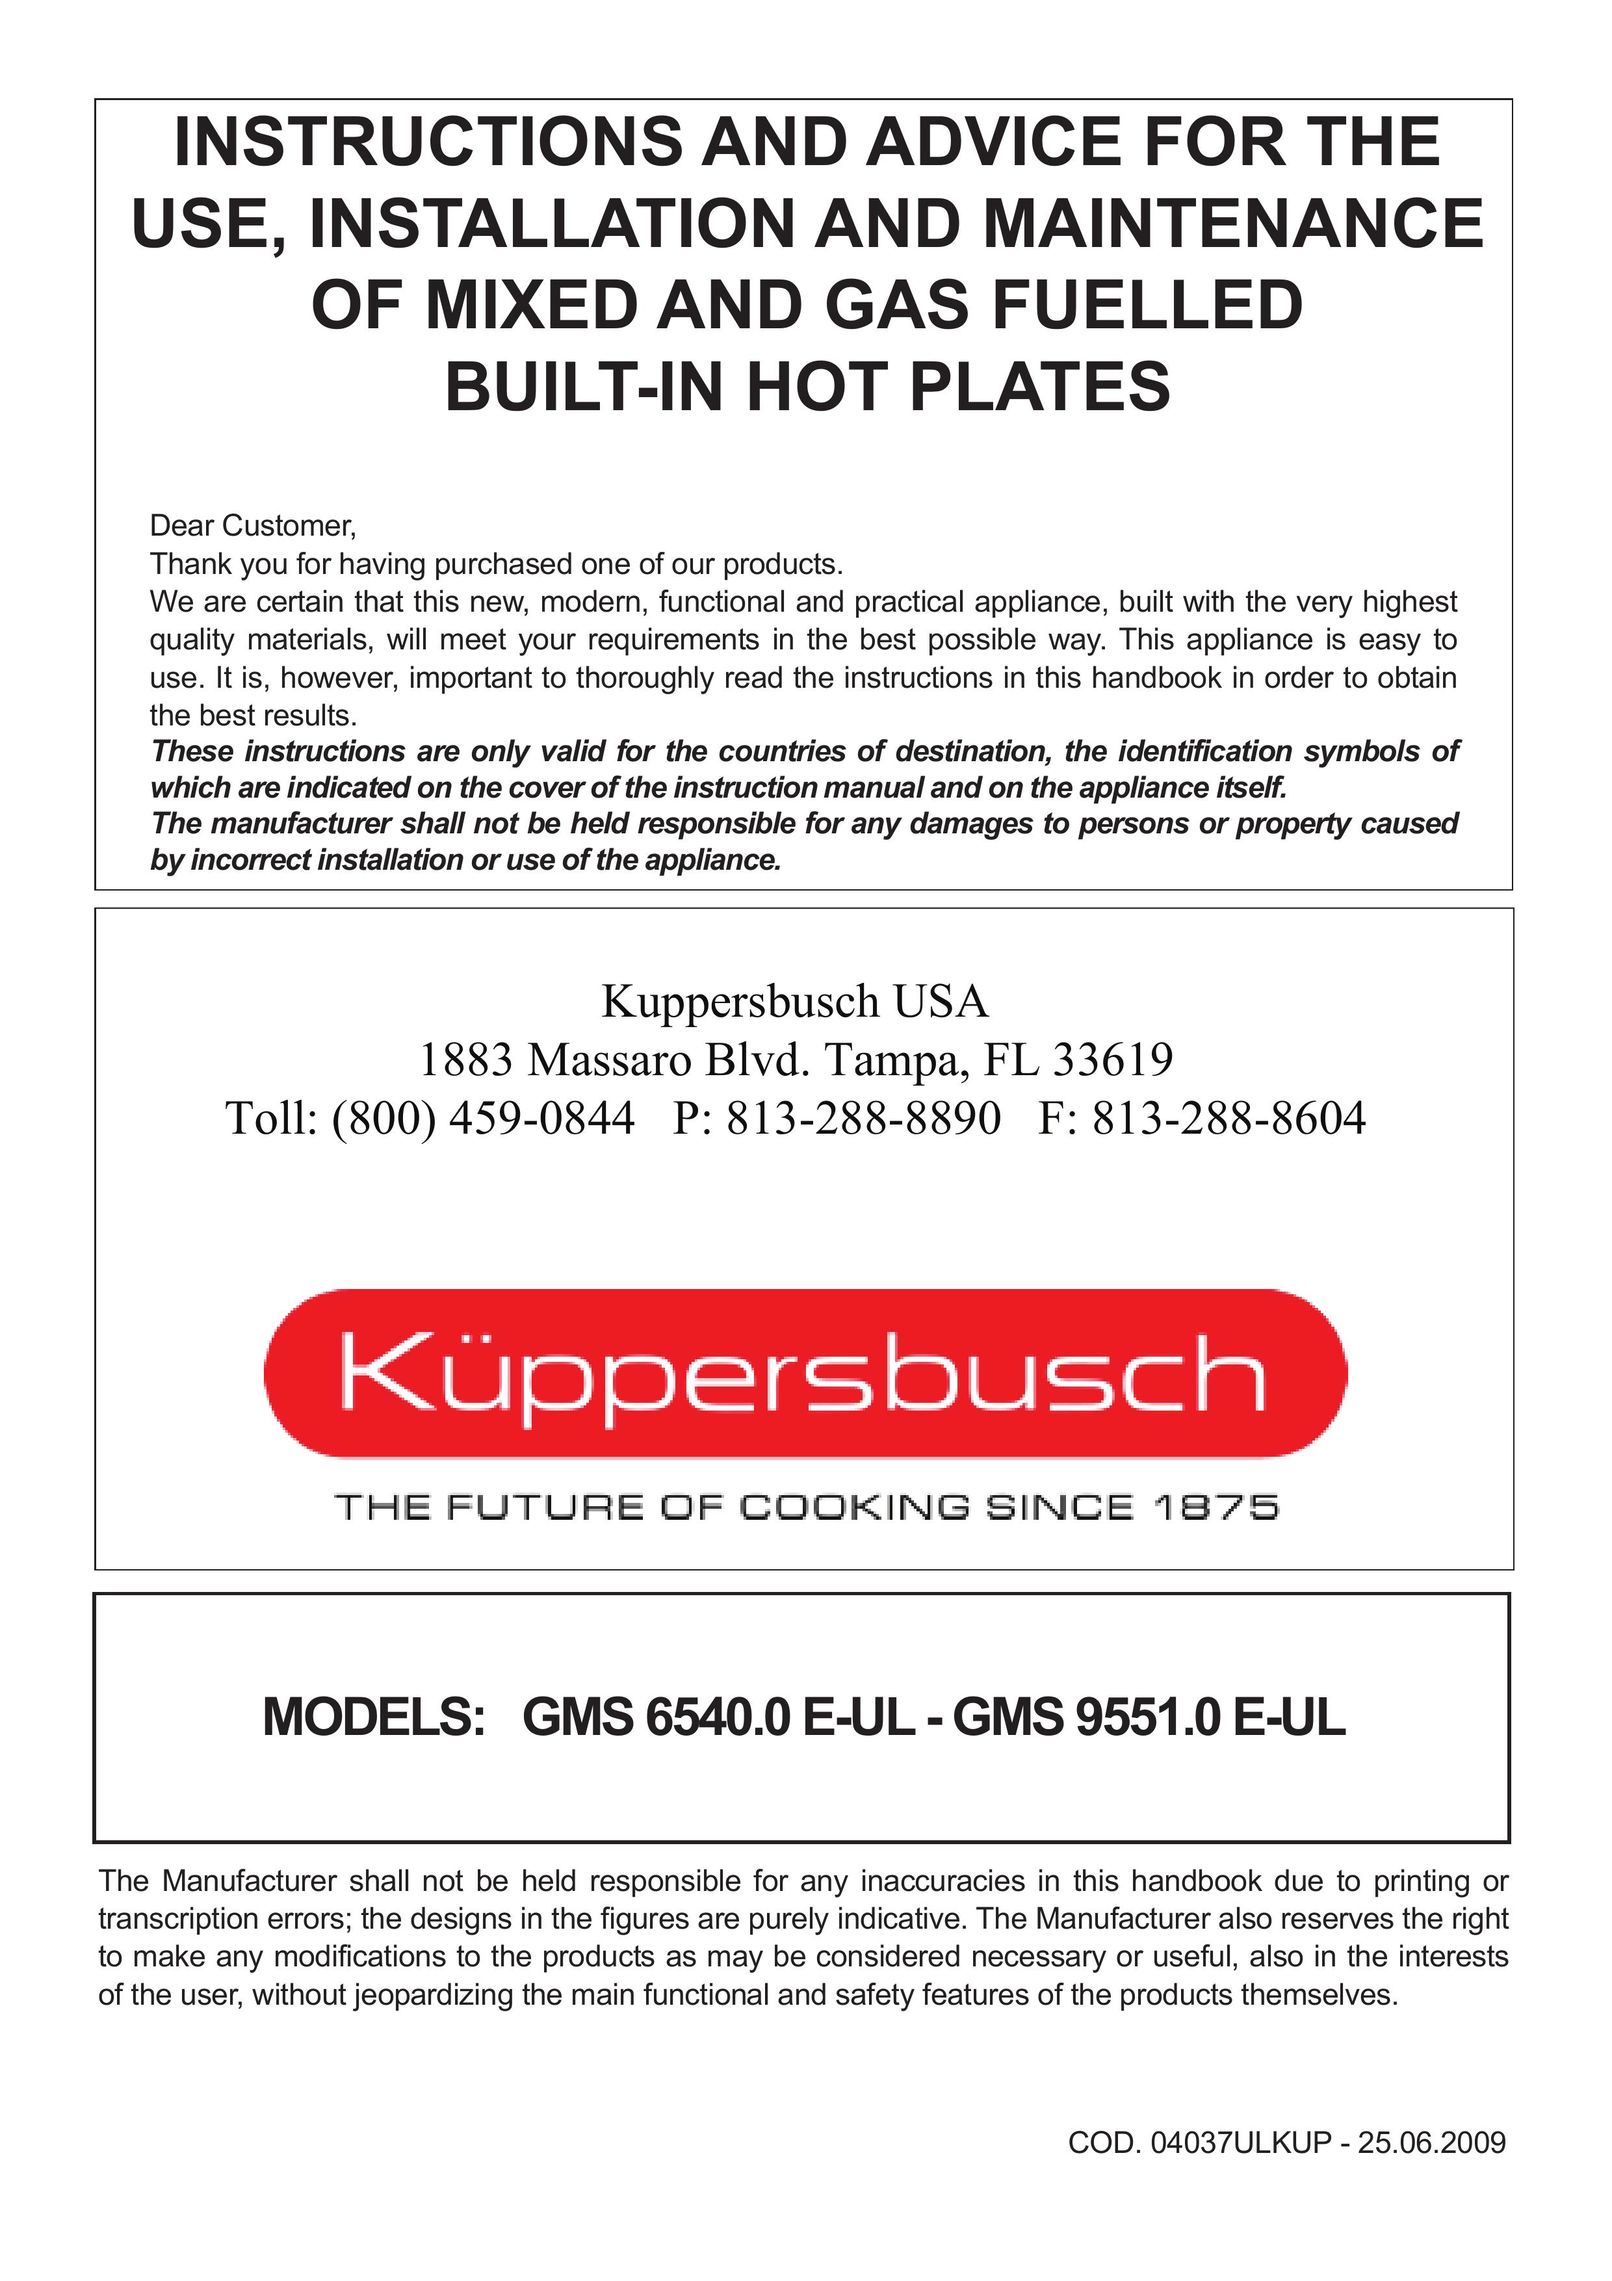 Kuppersbusch USA GMS 9551.0 E-UL Food Warmer User Manual